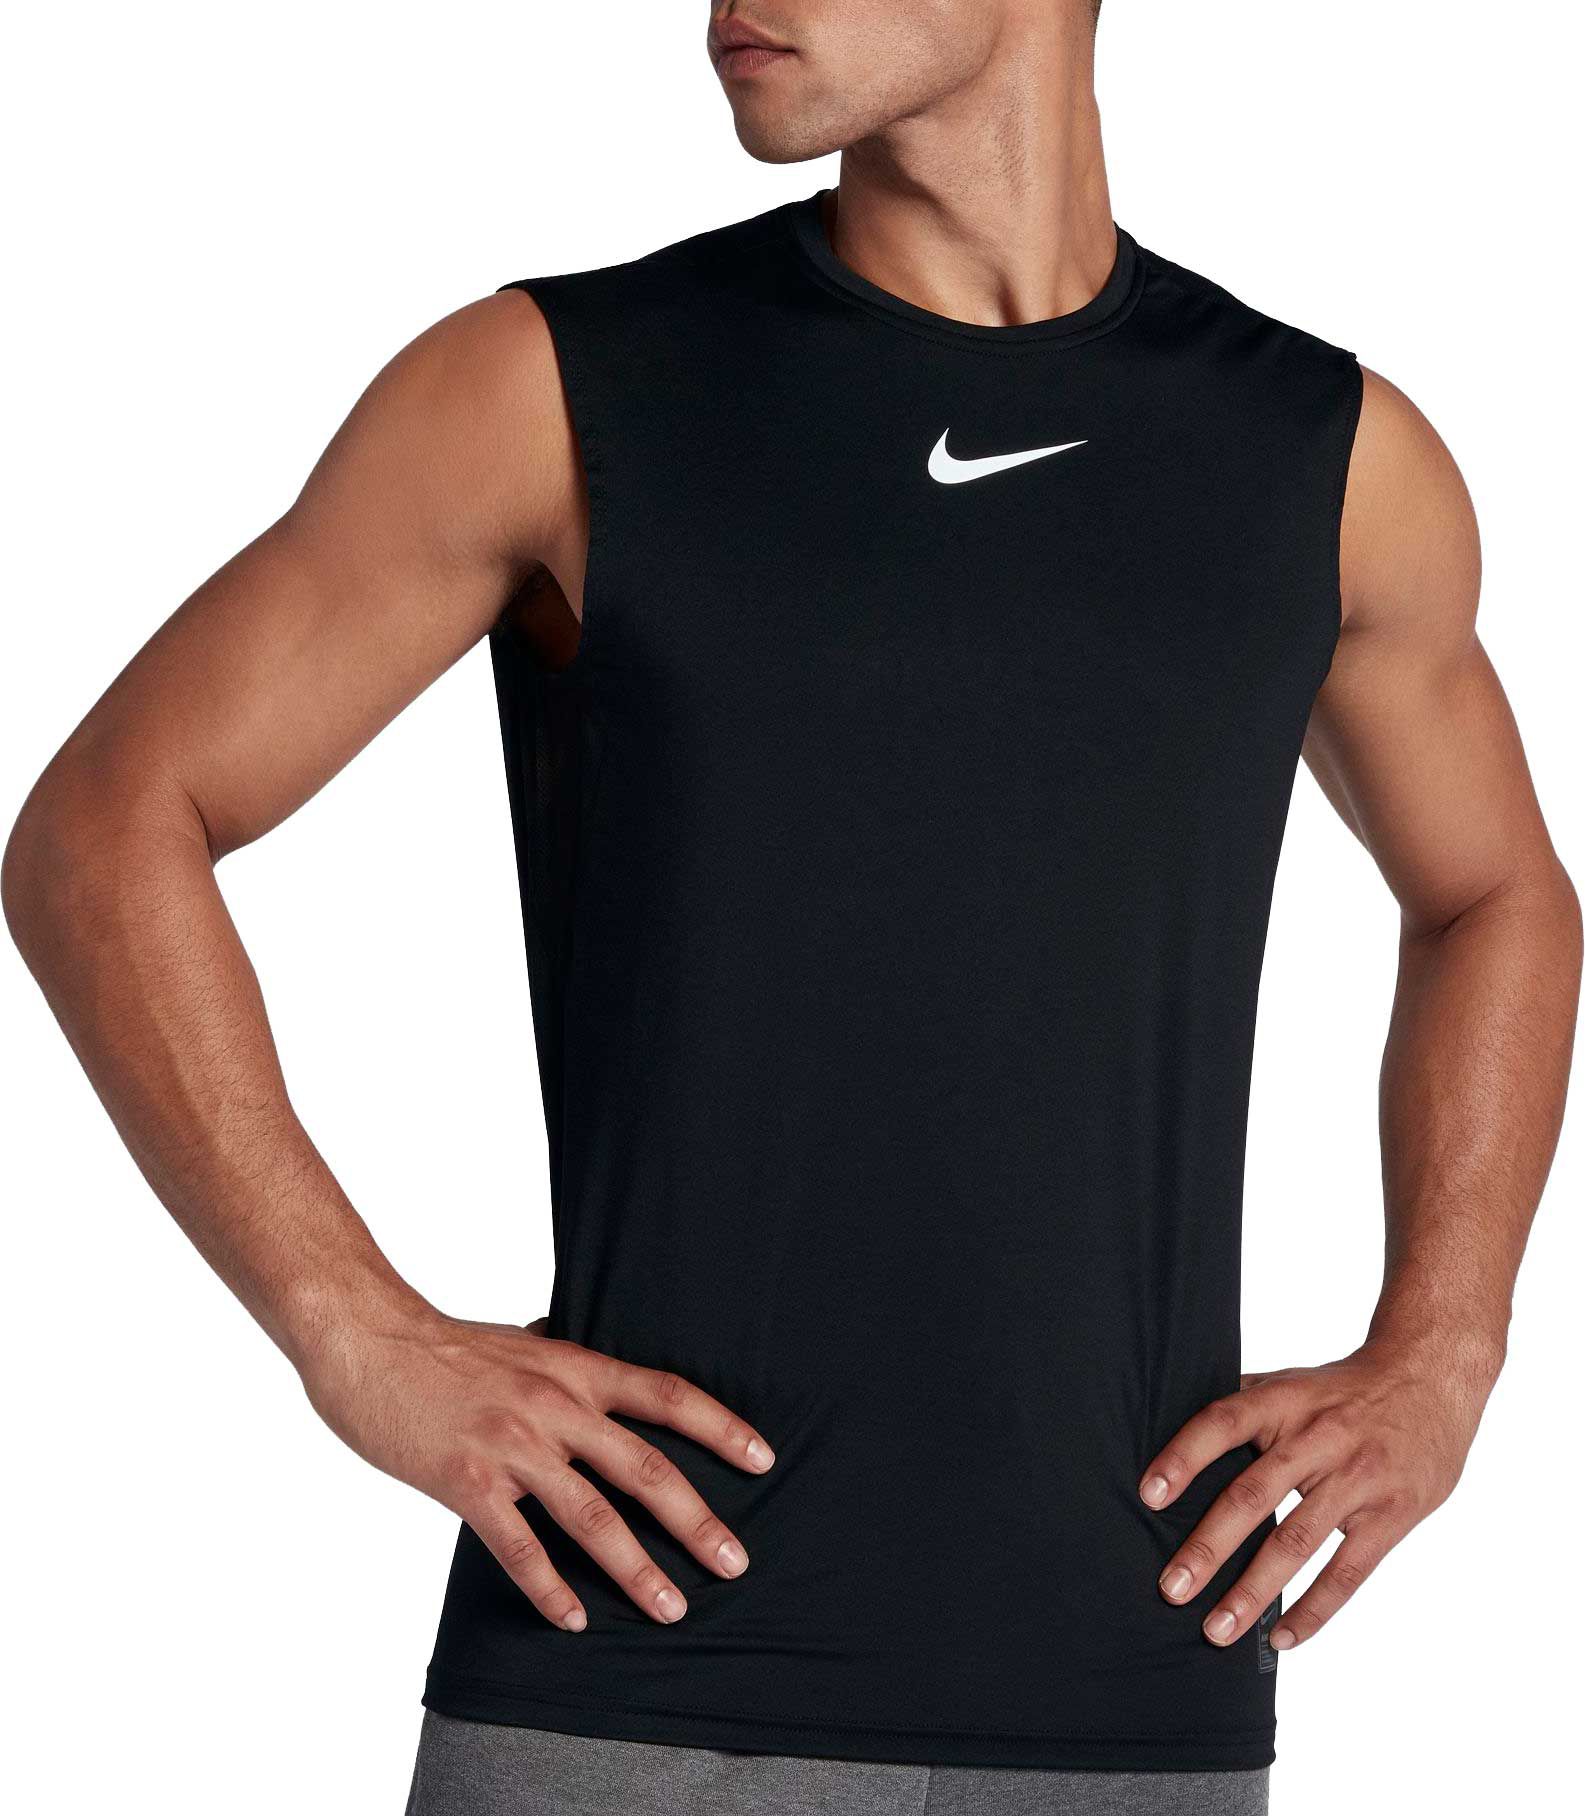 Nike Pro Men's Fitted Sleeveless Shirt - .97 - .97